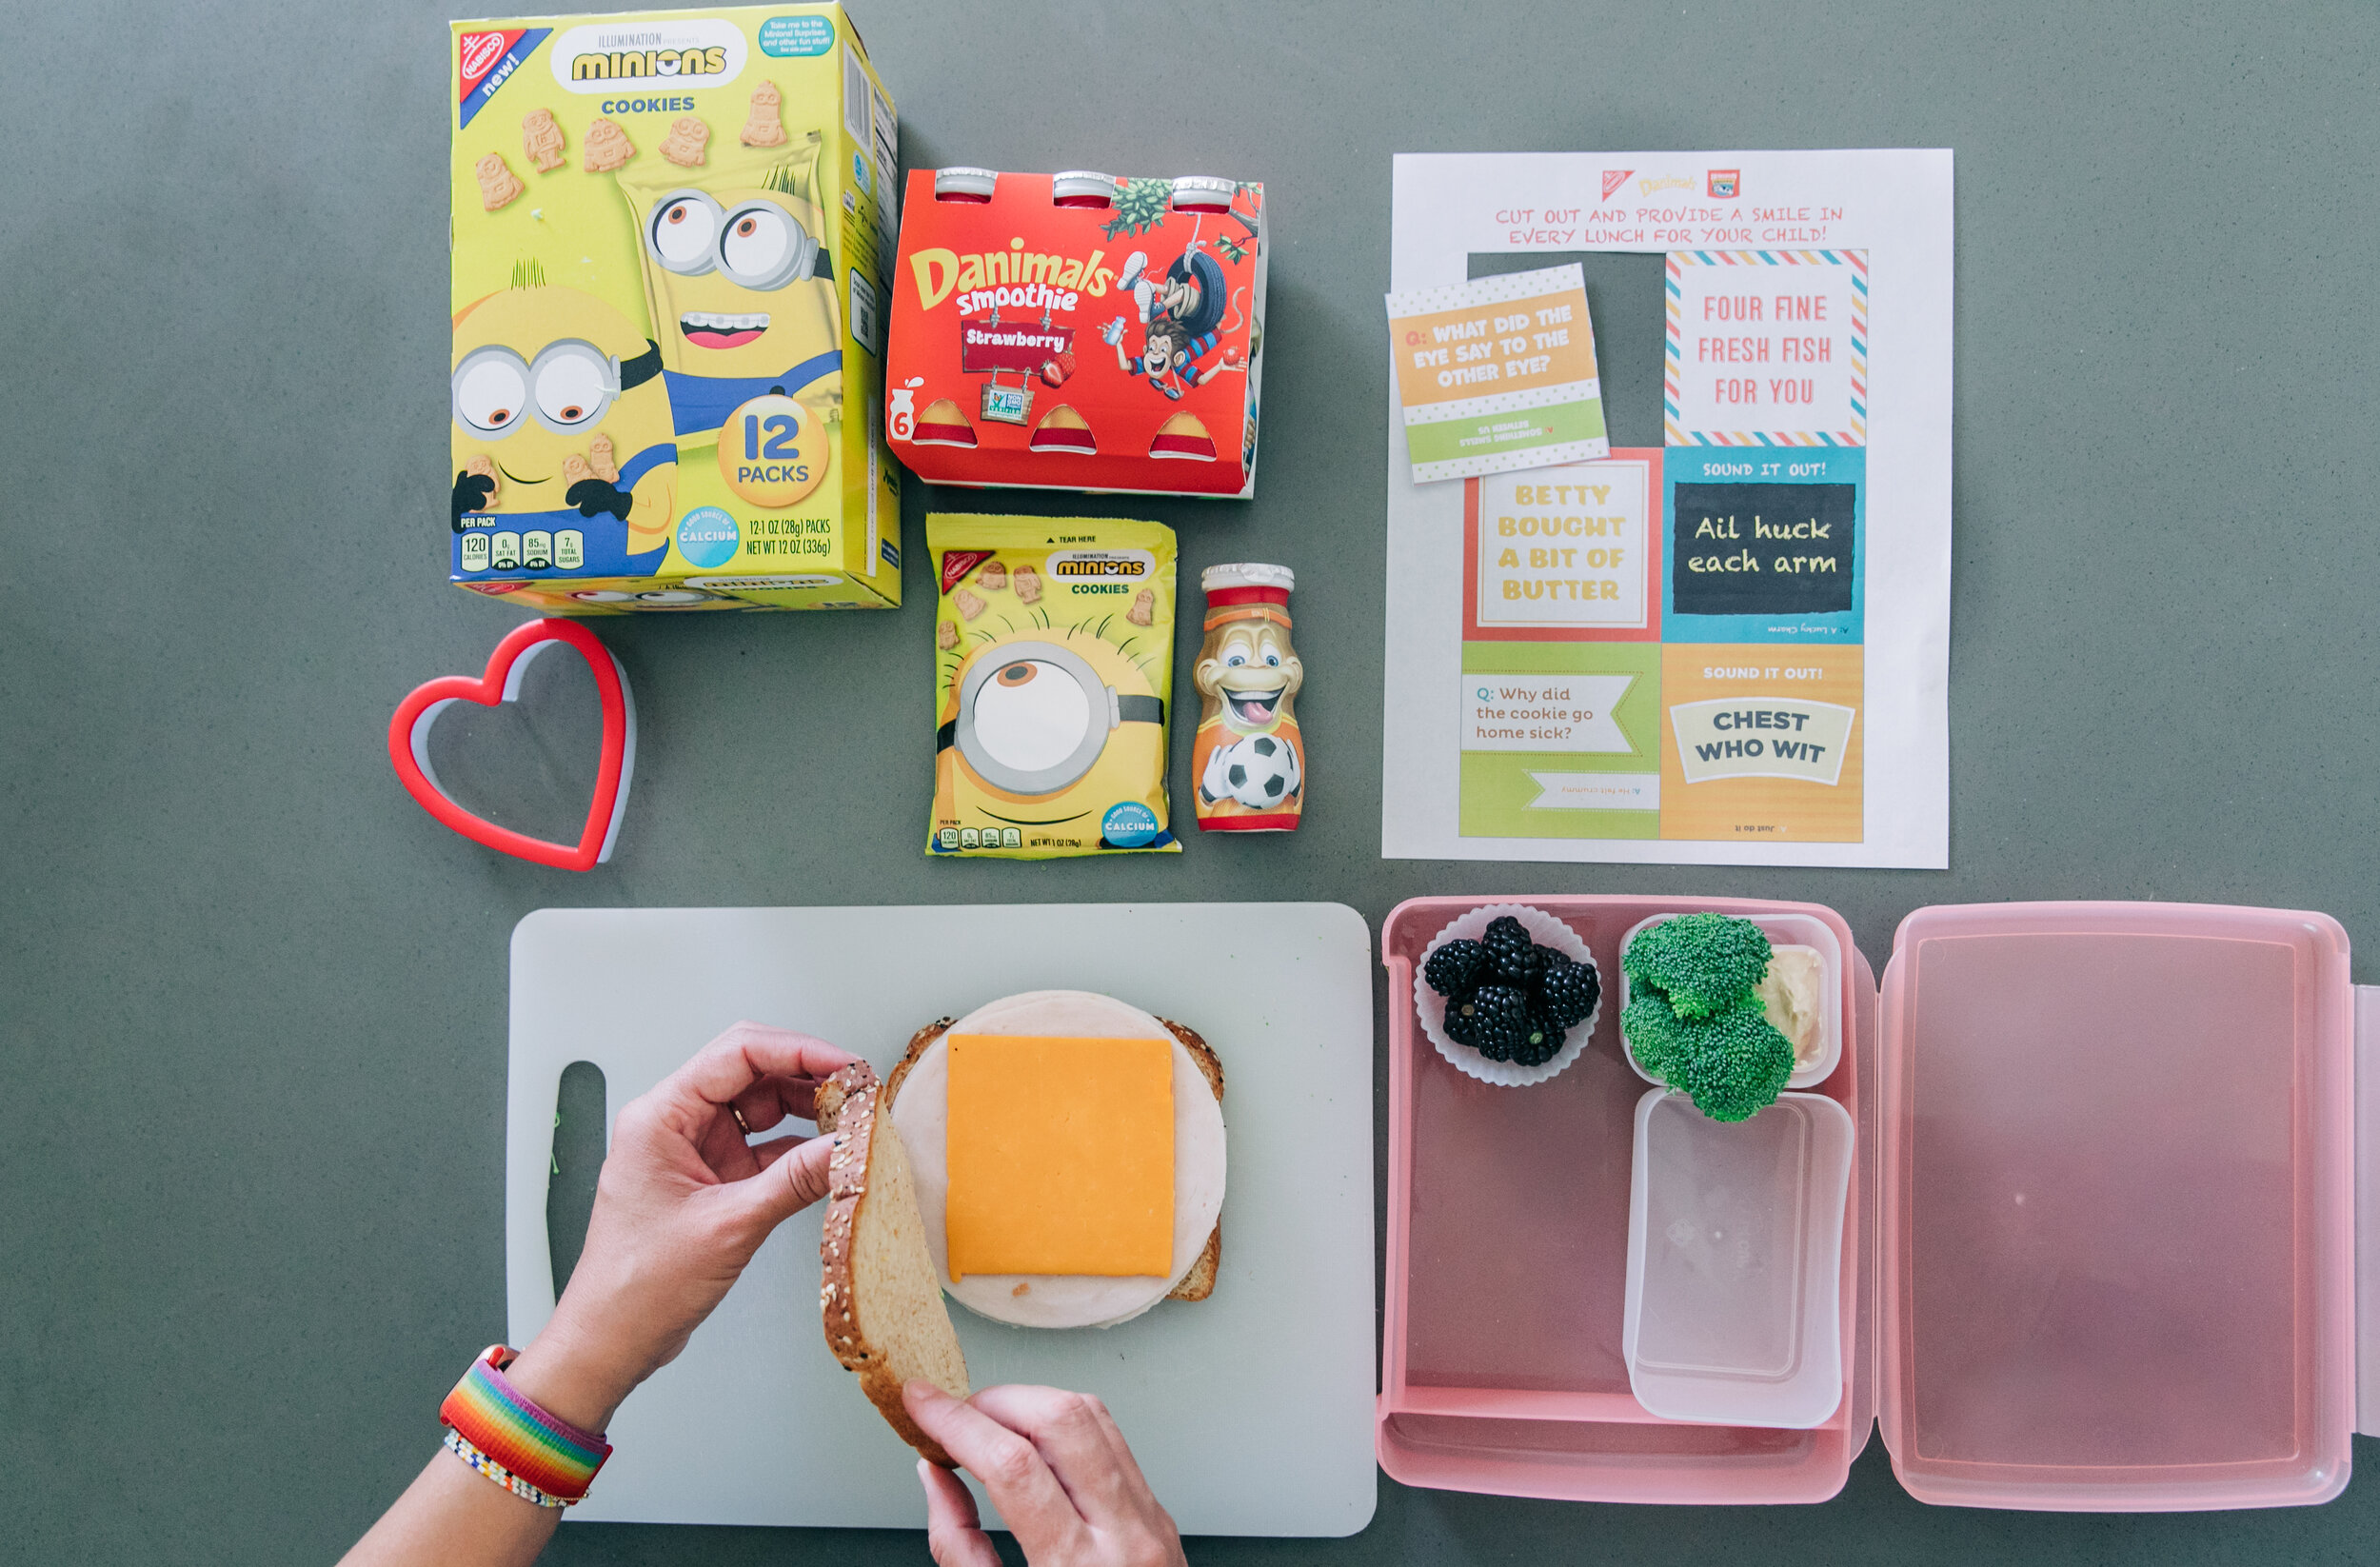 Mila's Preschool Lunches & Quick Snack Ideas — Jacqui Saldaña